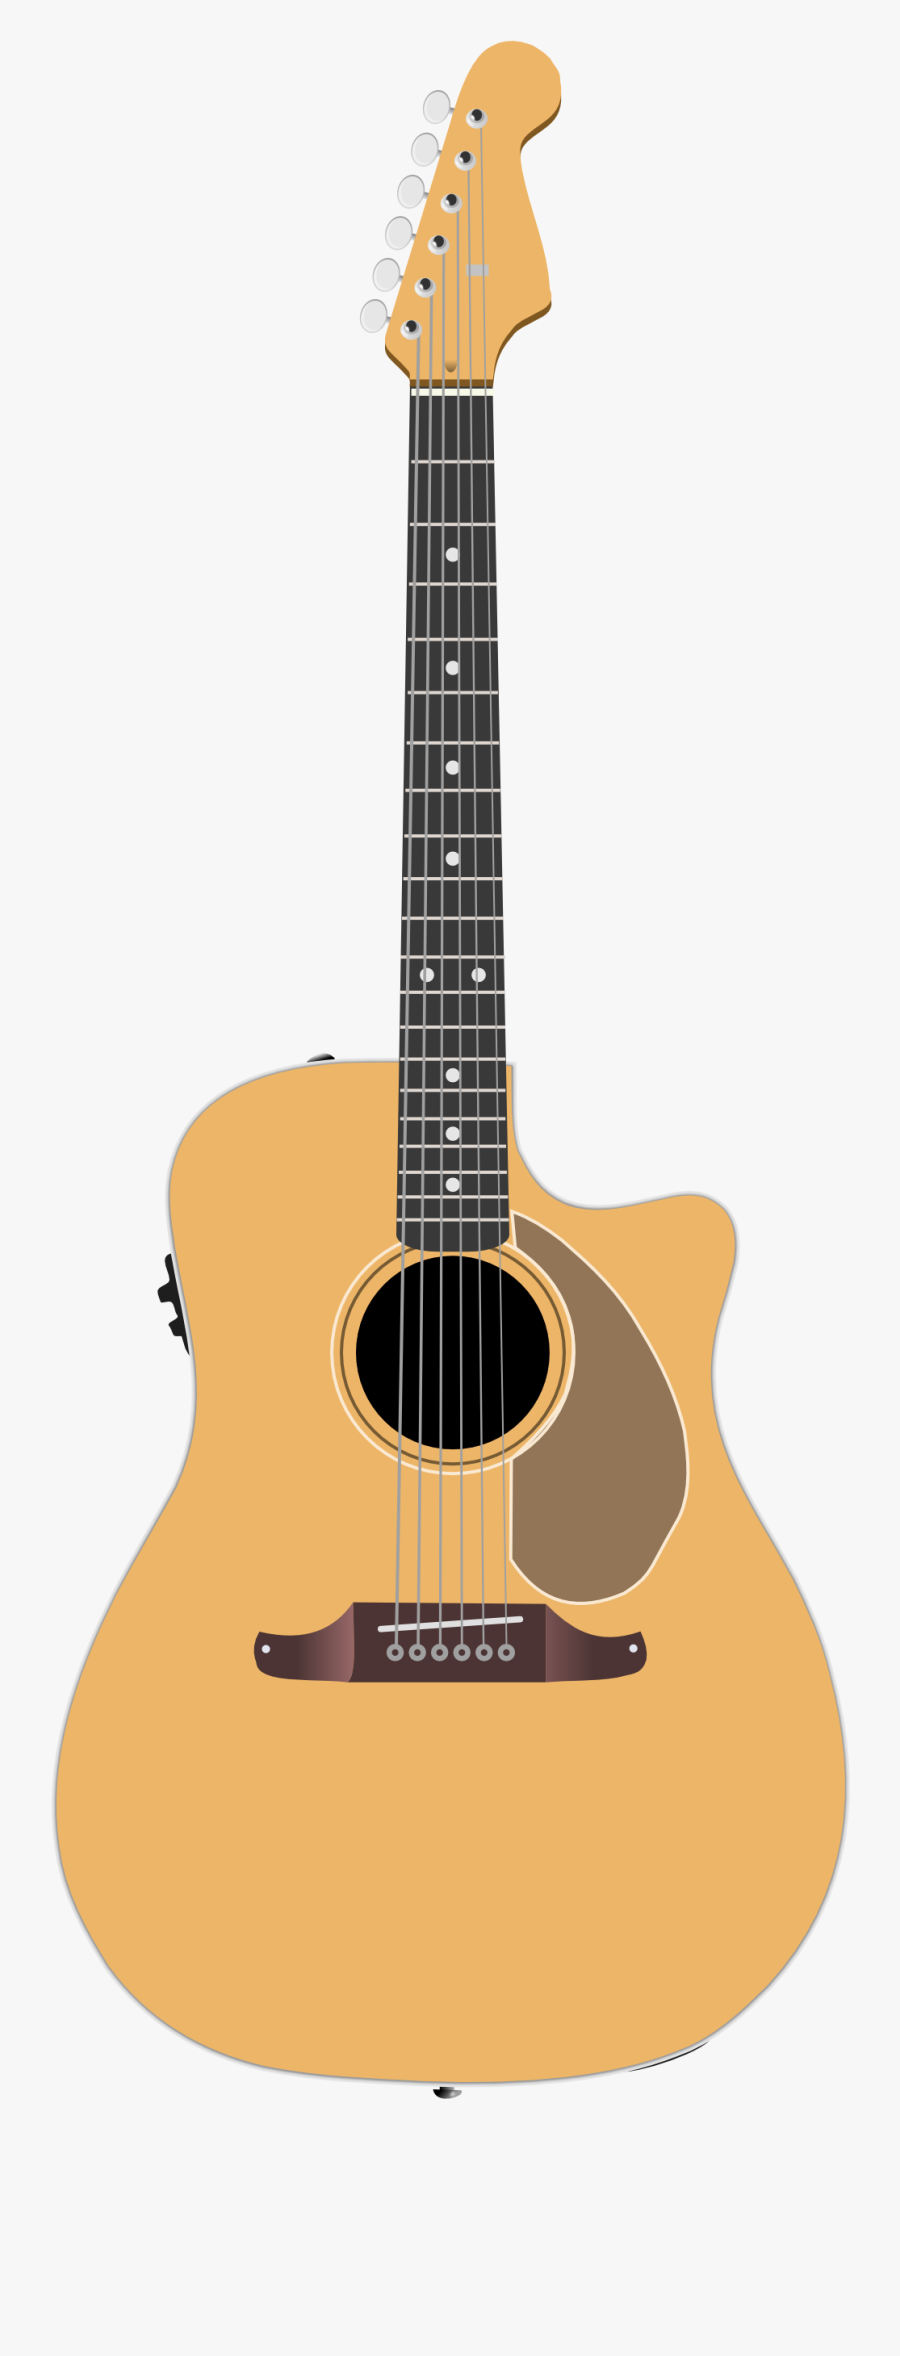 Acoustic Guitar Clipart Real Guitar - Guitar Cartoon Png Hd, Transparent Clipart